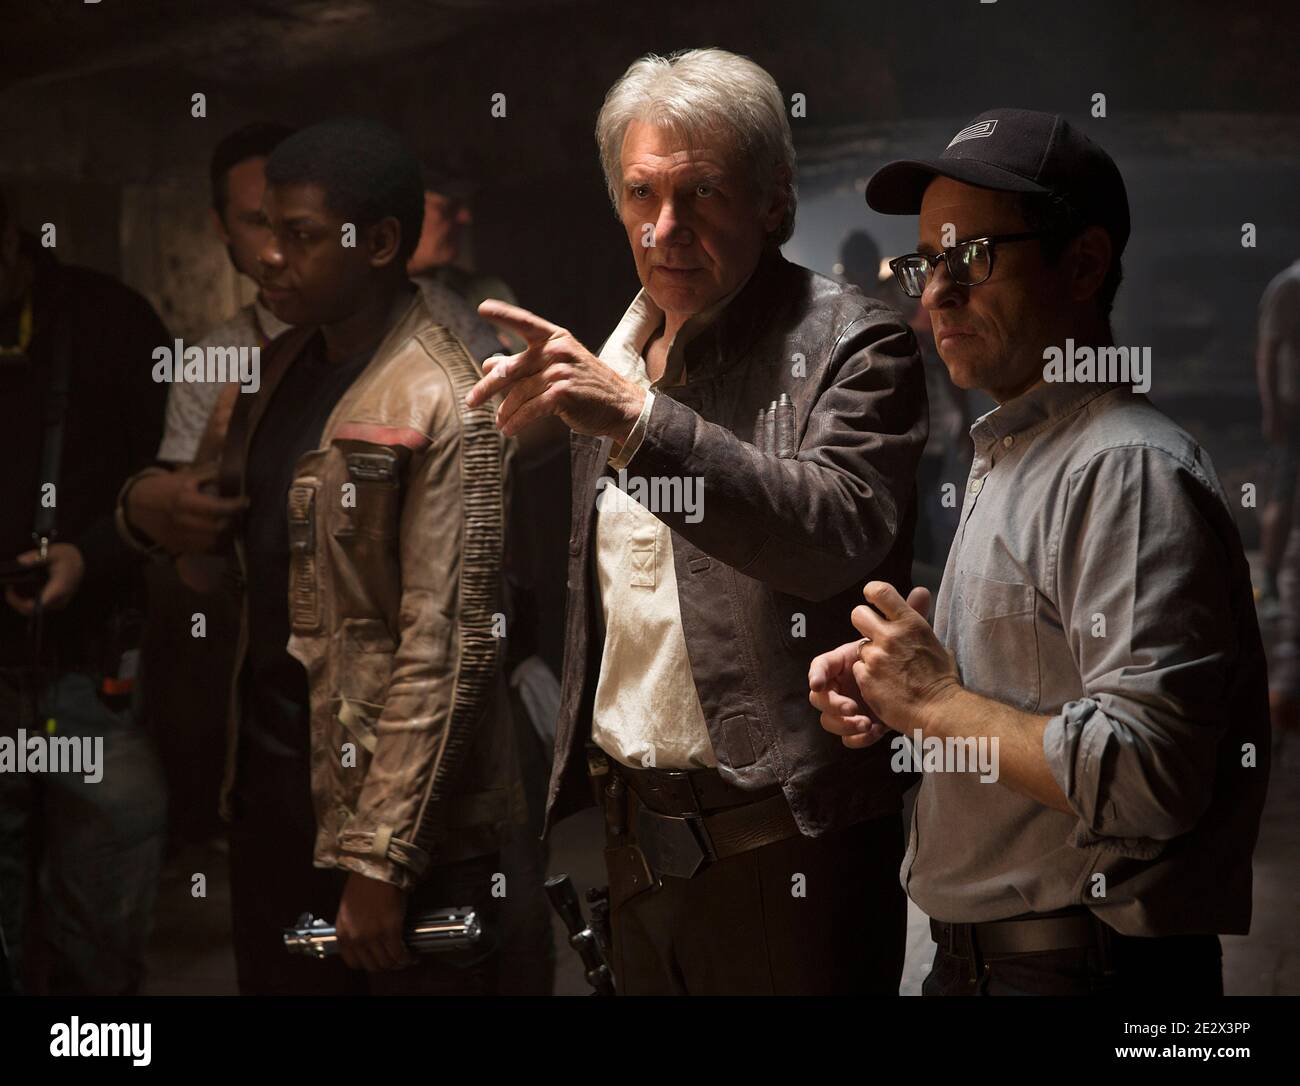 'Star Wars Episode VII: The Force Awakens'. Left to right: John Boyega (Finn), Harrison Ford (Han Solo), and director J.J. Abrams. Stock Photo